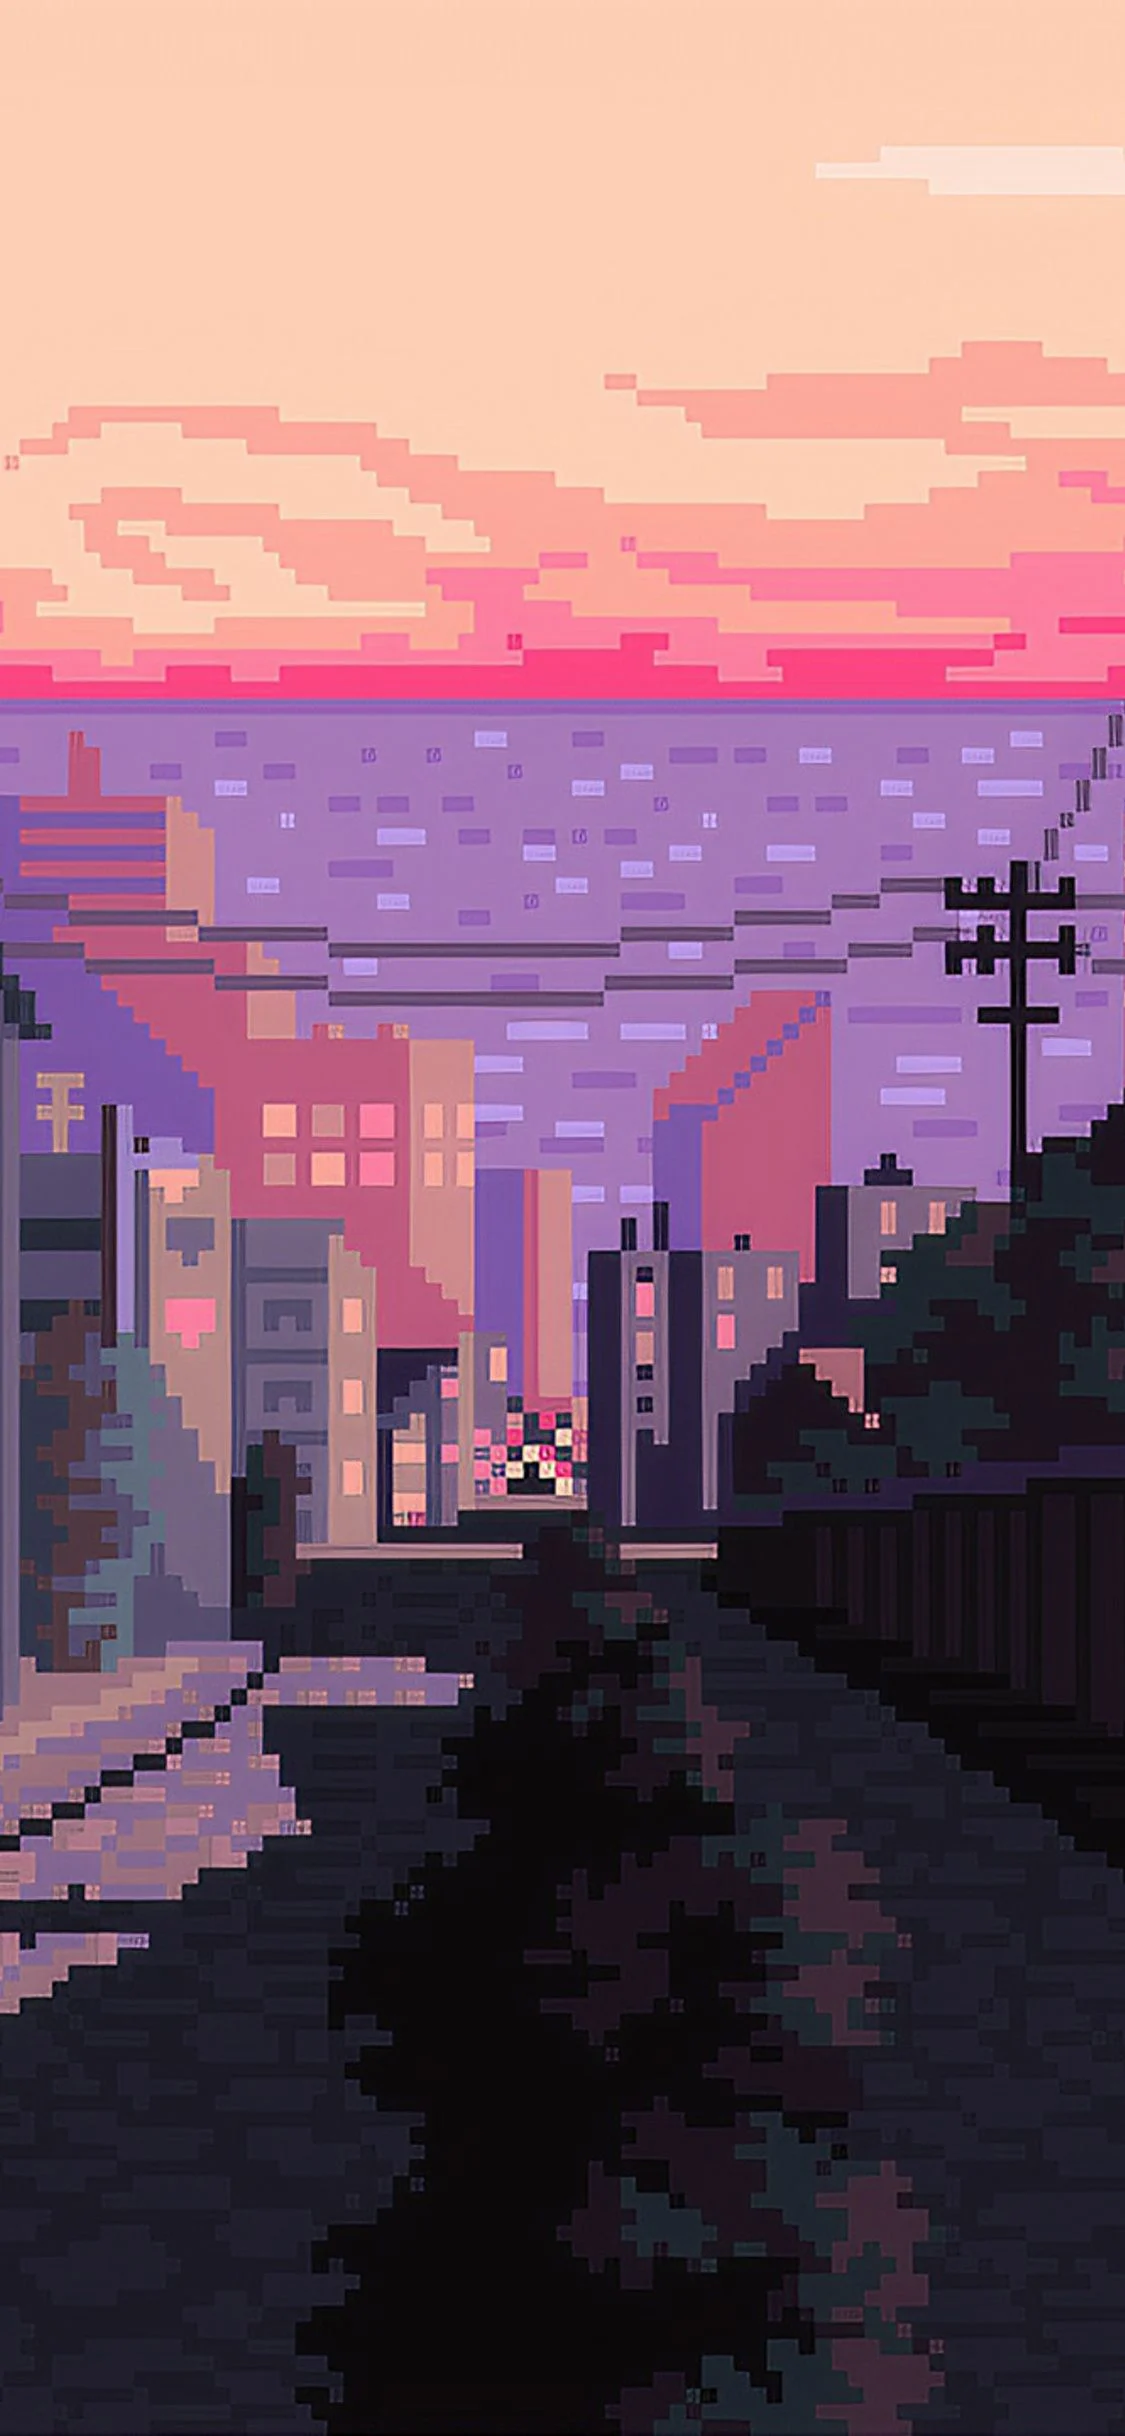 Pixel art Wallpaper - NawPic